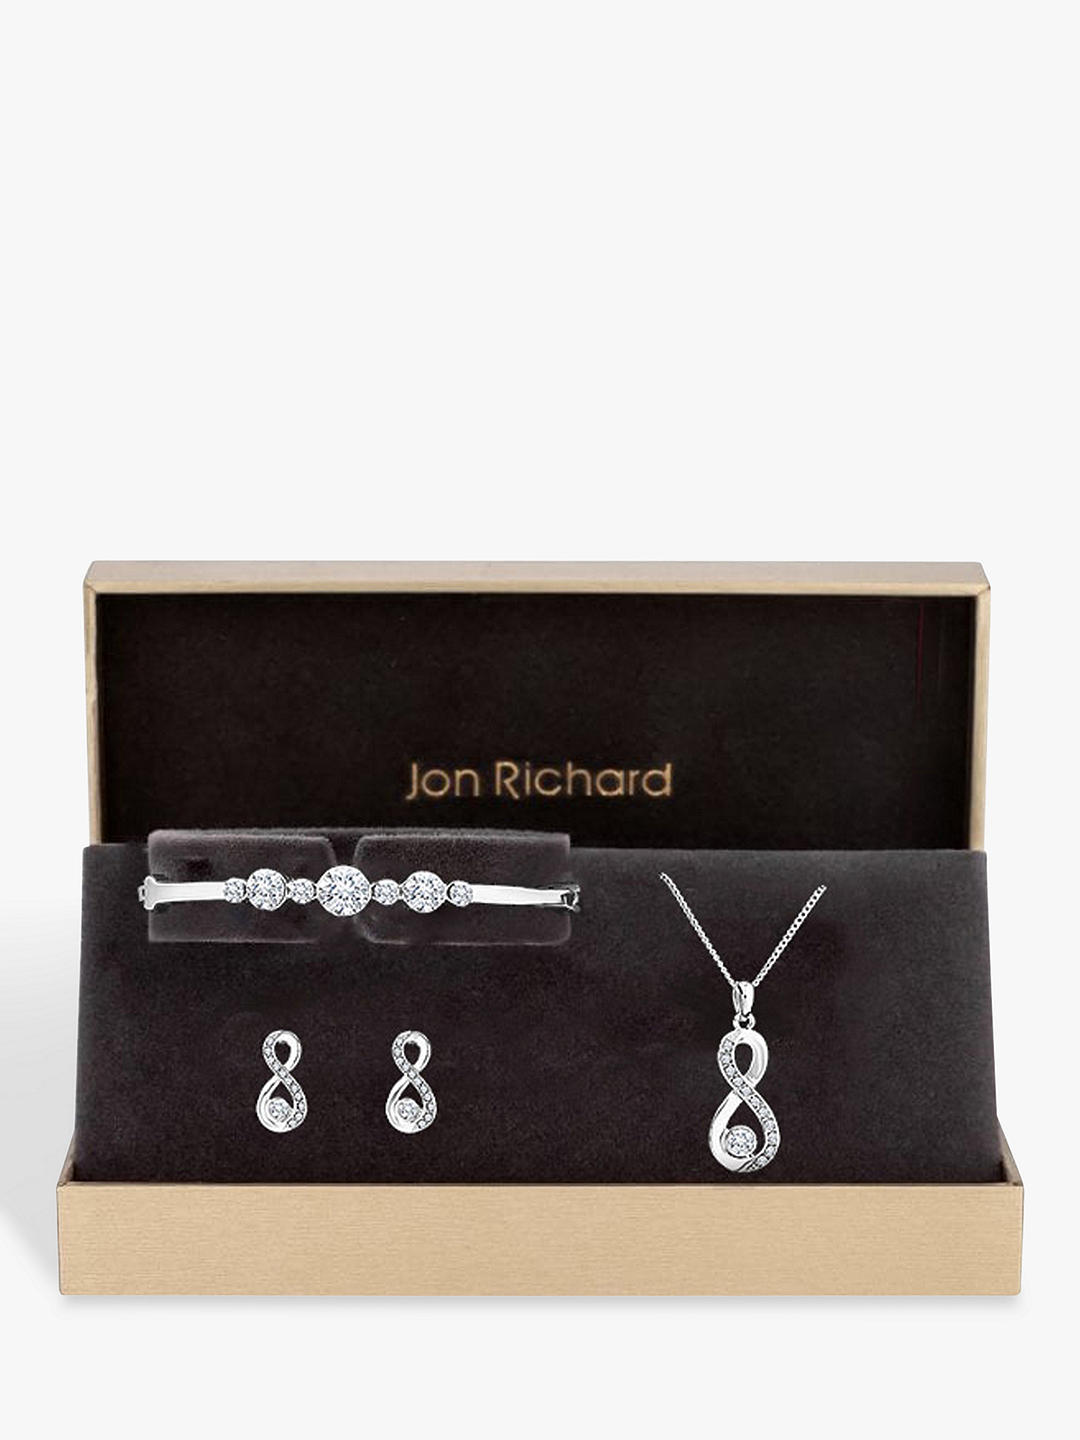 Jon Richard Glass Crystal Infinity Pendant Necklace, Bracelet and Drop Earrings Jewellery Gift Set, Silver